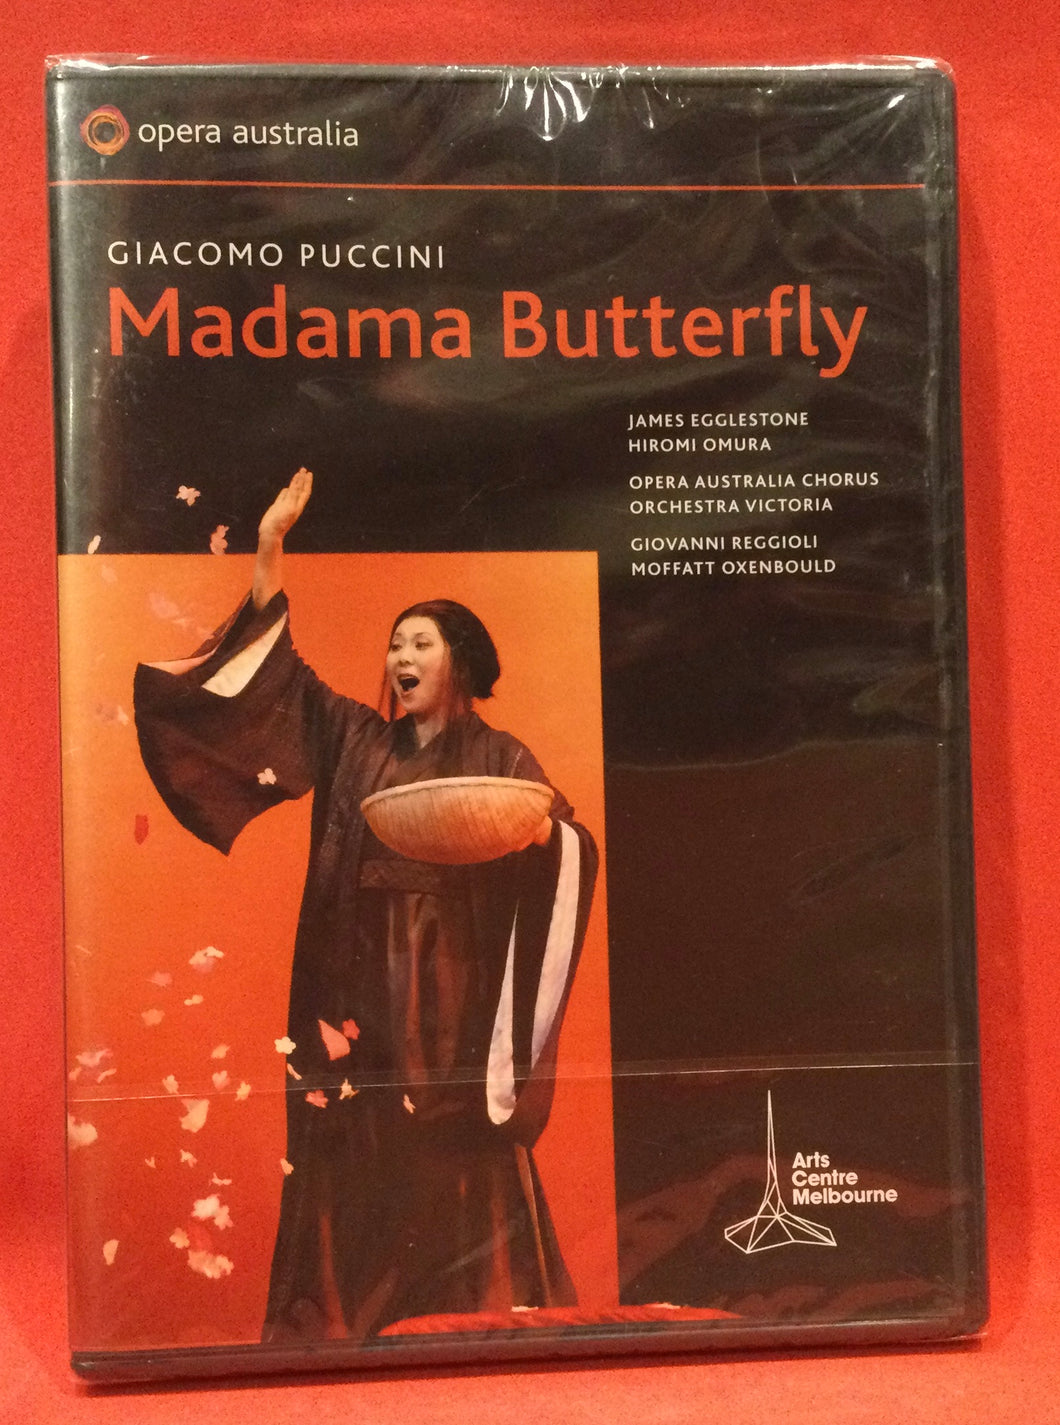 MADAMA BUTTERFLY - OPERA AUSTRALIA GIACOMO PUCCINI - DVD (SEALED)